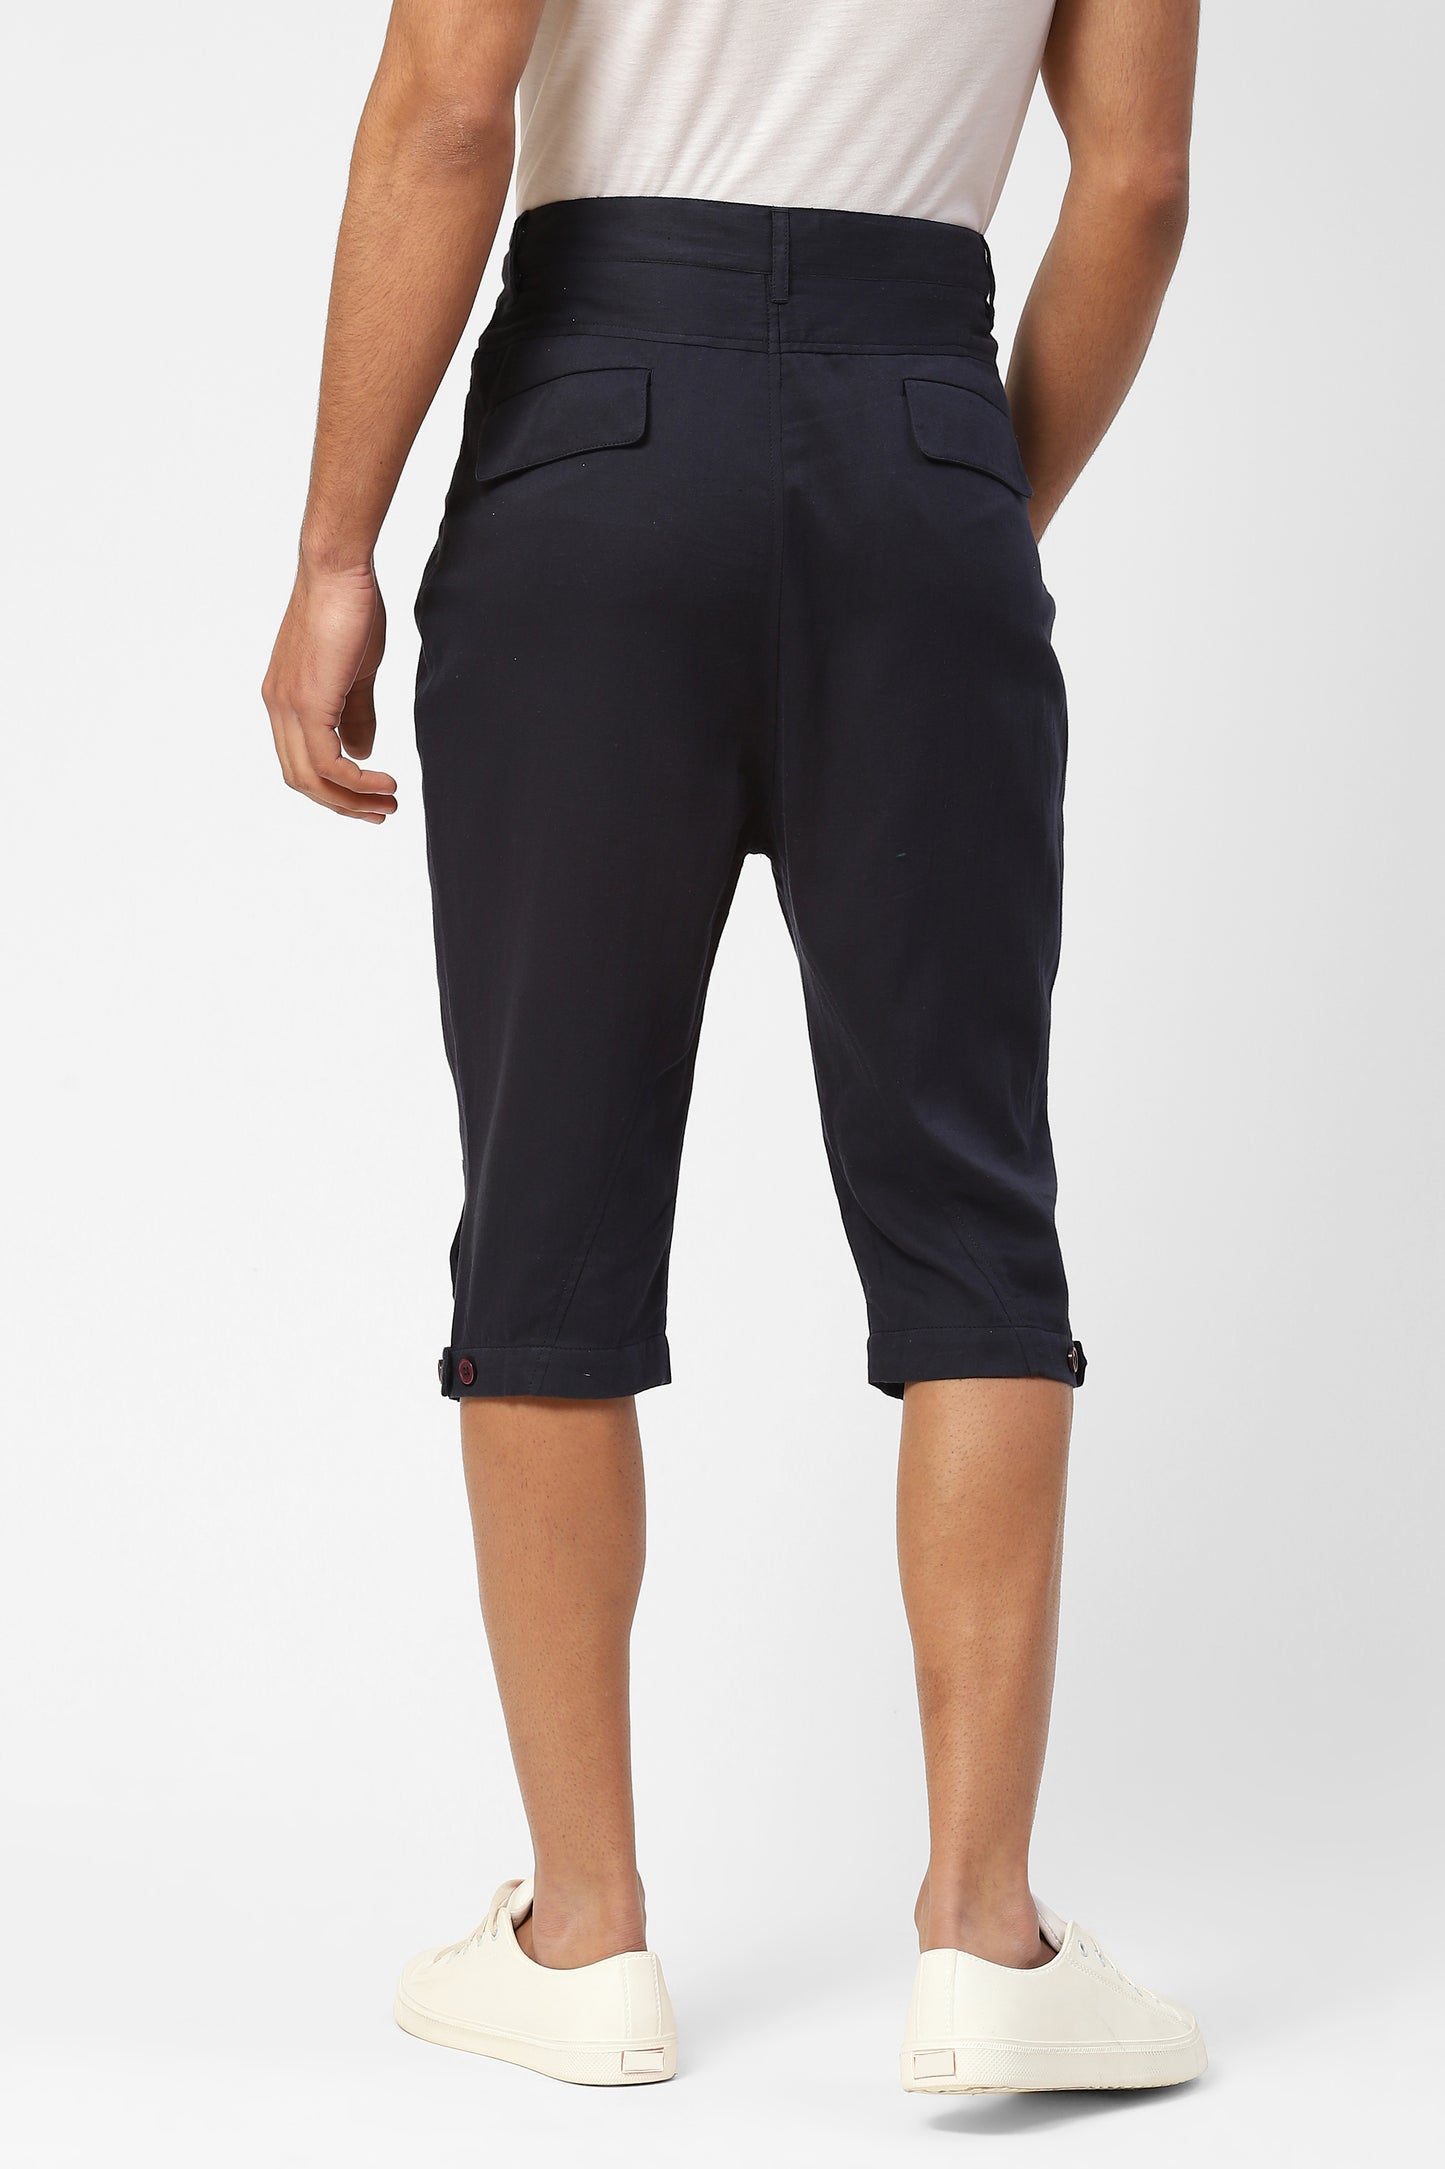 Navy Blue Cotton Capri Shorts For Men